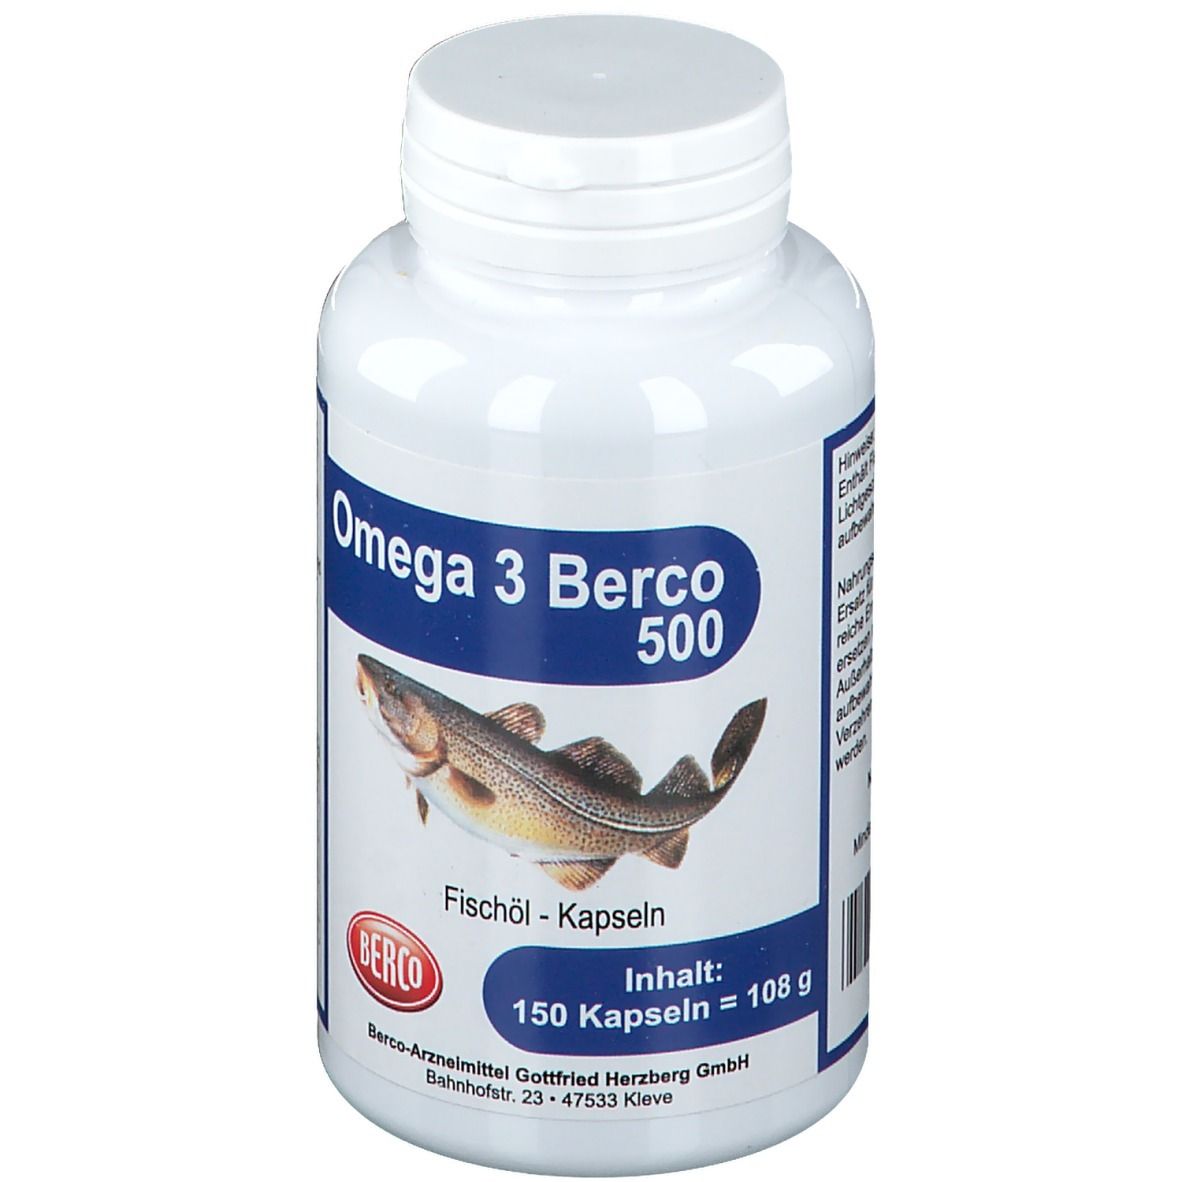 Omega 3 Berco